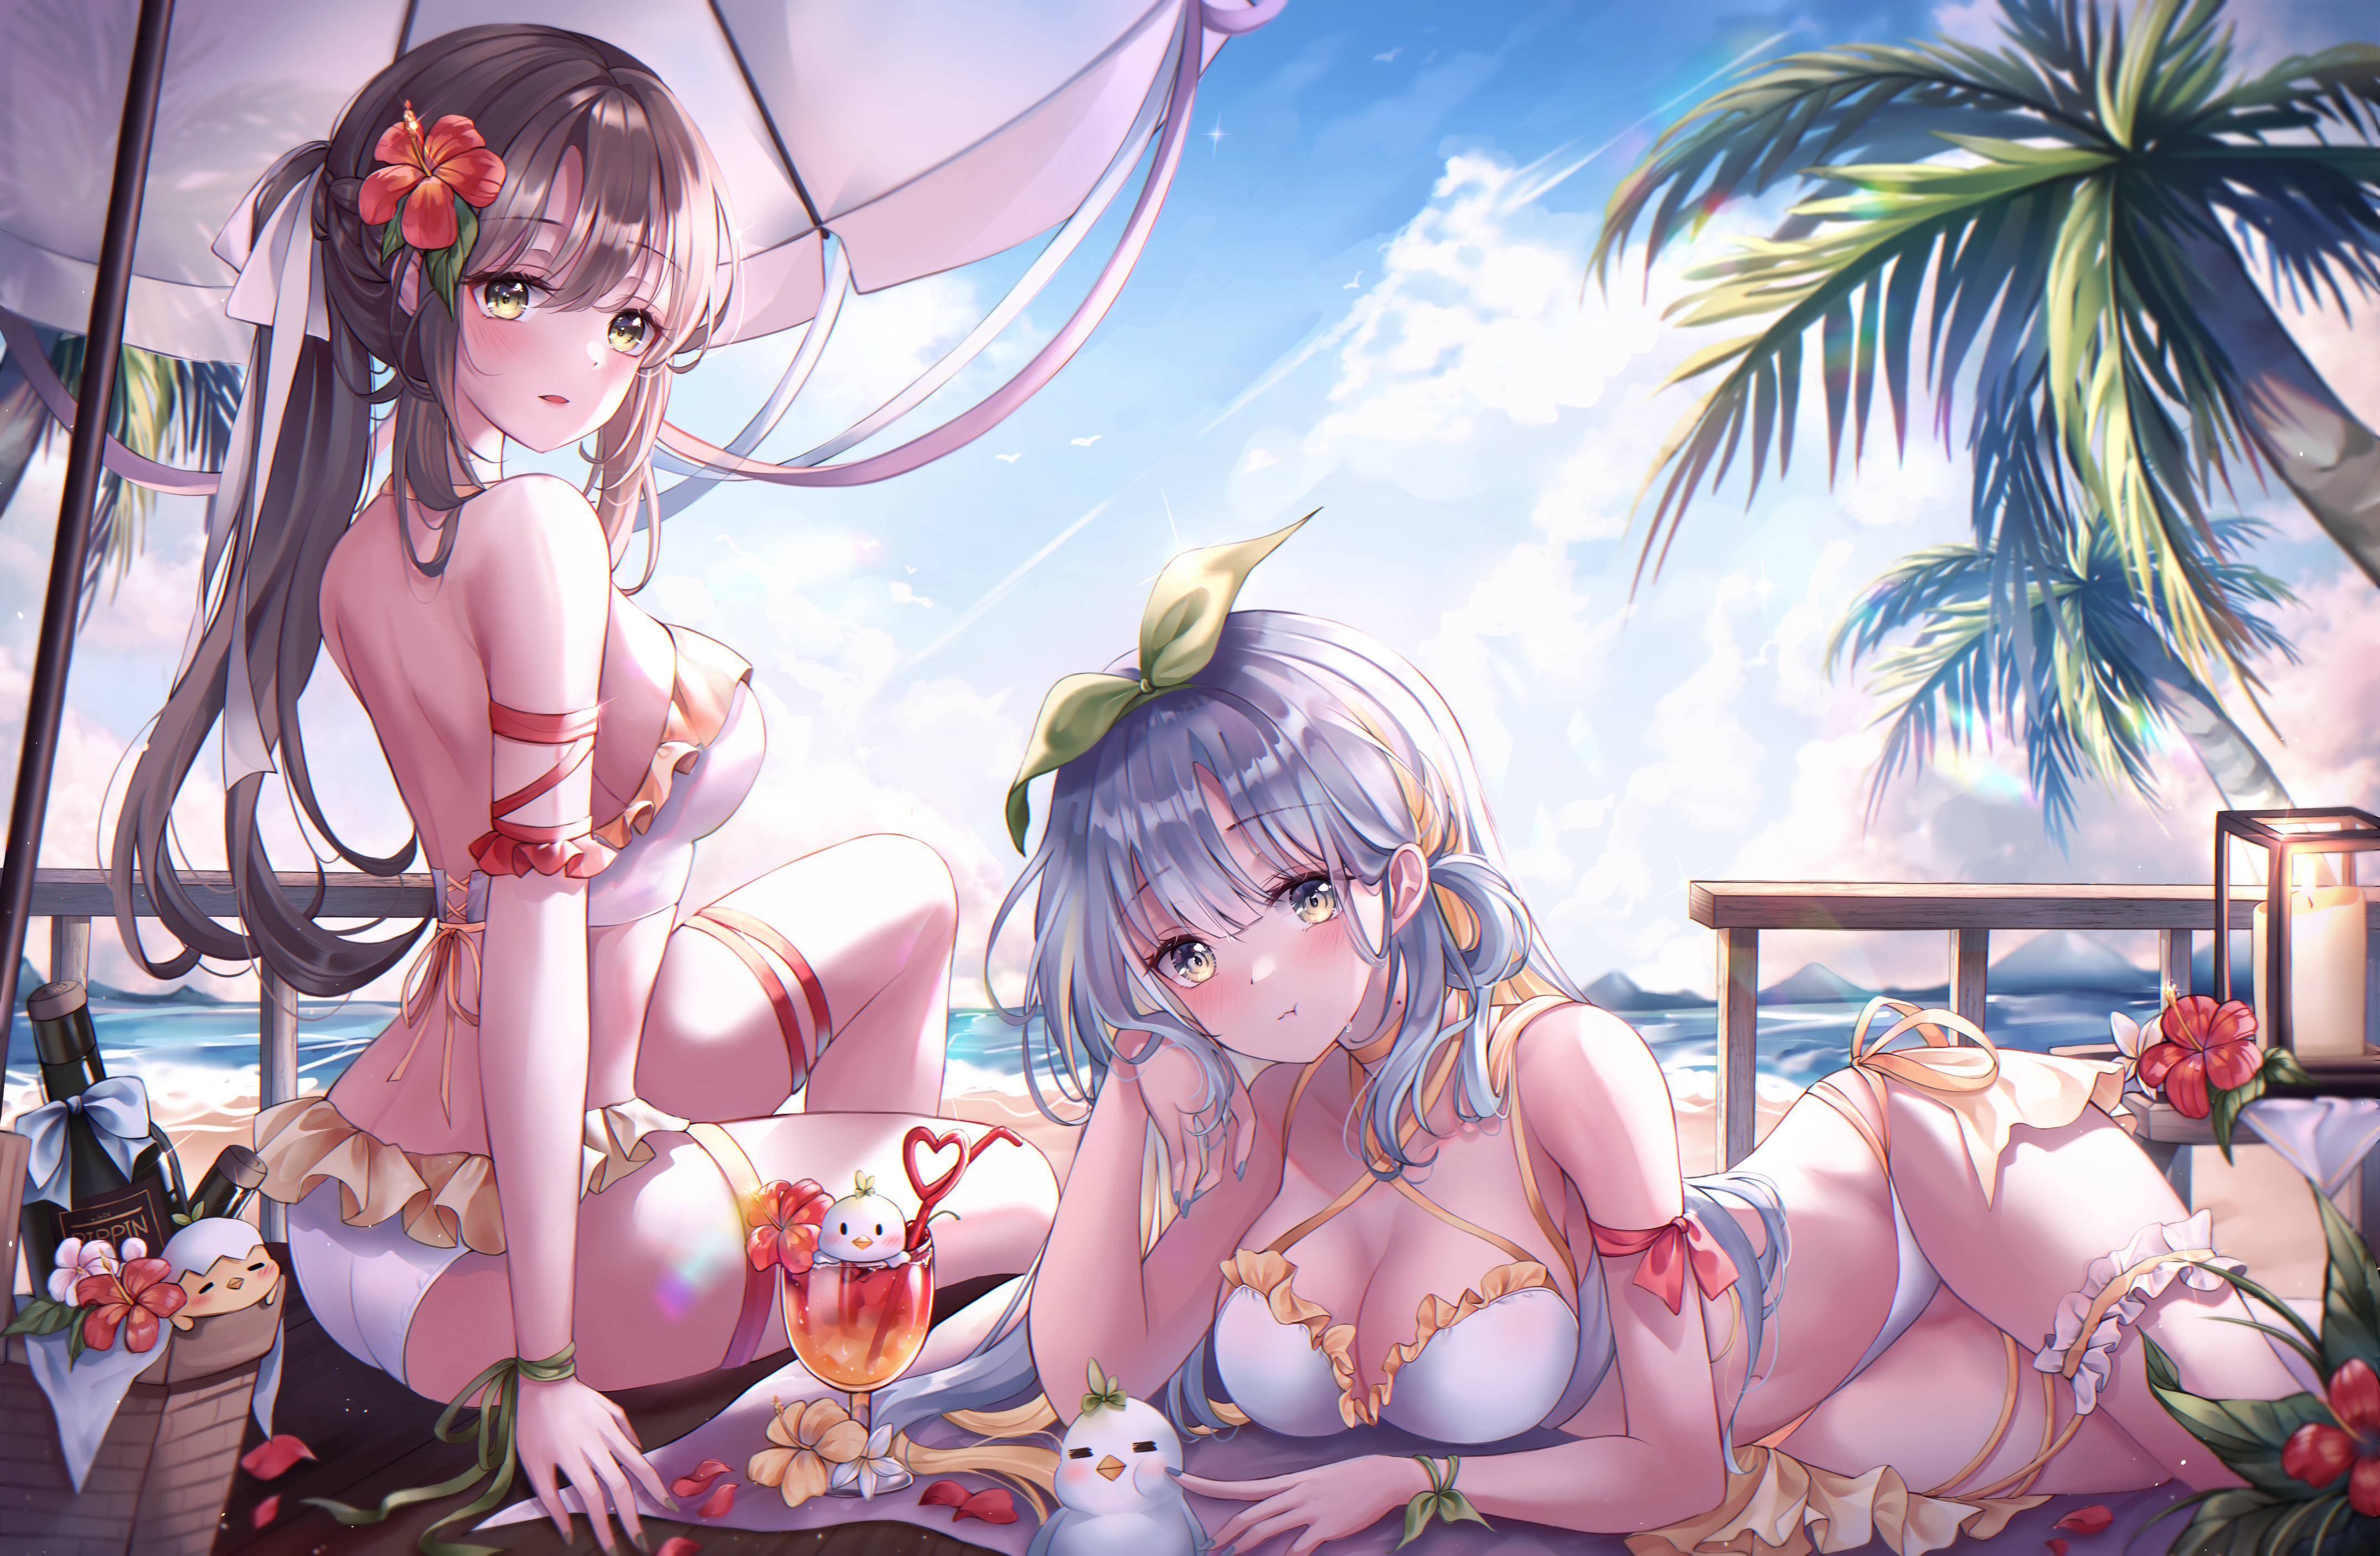 Anime 4299x2811 anime anime girls Pippin Sol artwork beach bikini big boobs cleavage parasol cocktails palm trees flowers hibiscus sideboob